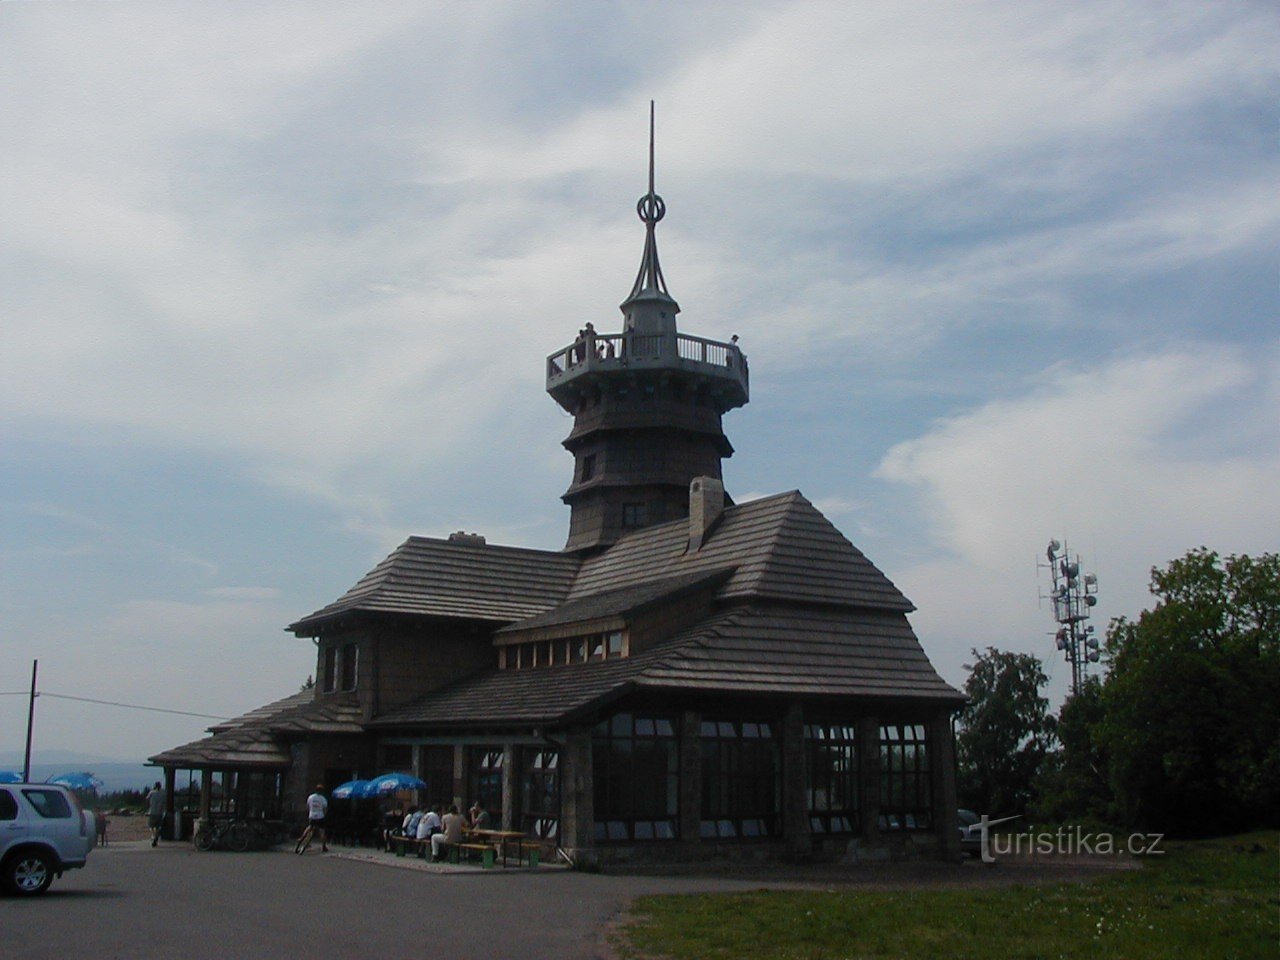 Torre di avvistamento sul cottage Dobrošov - Jiráskova